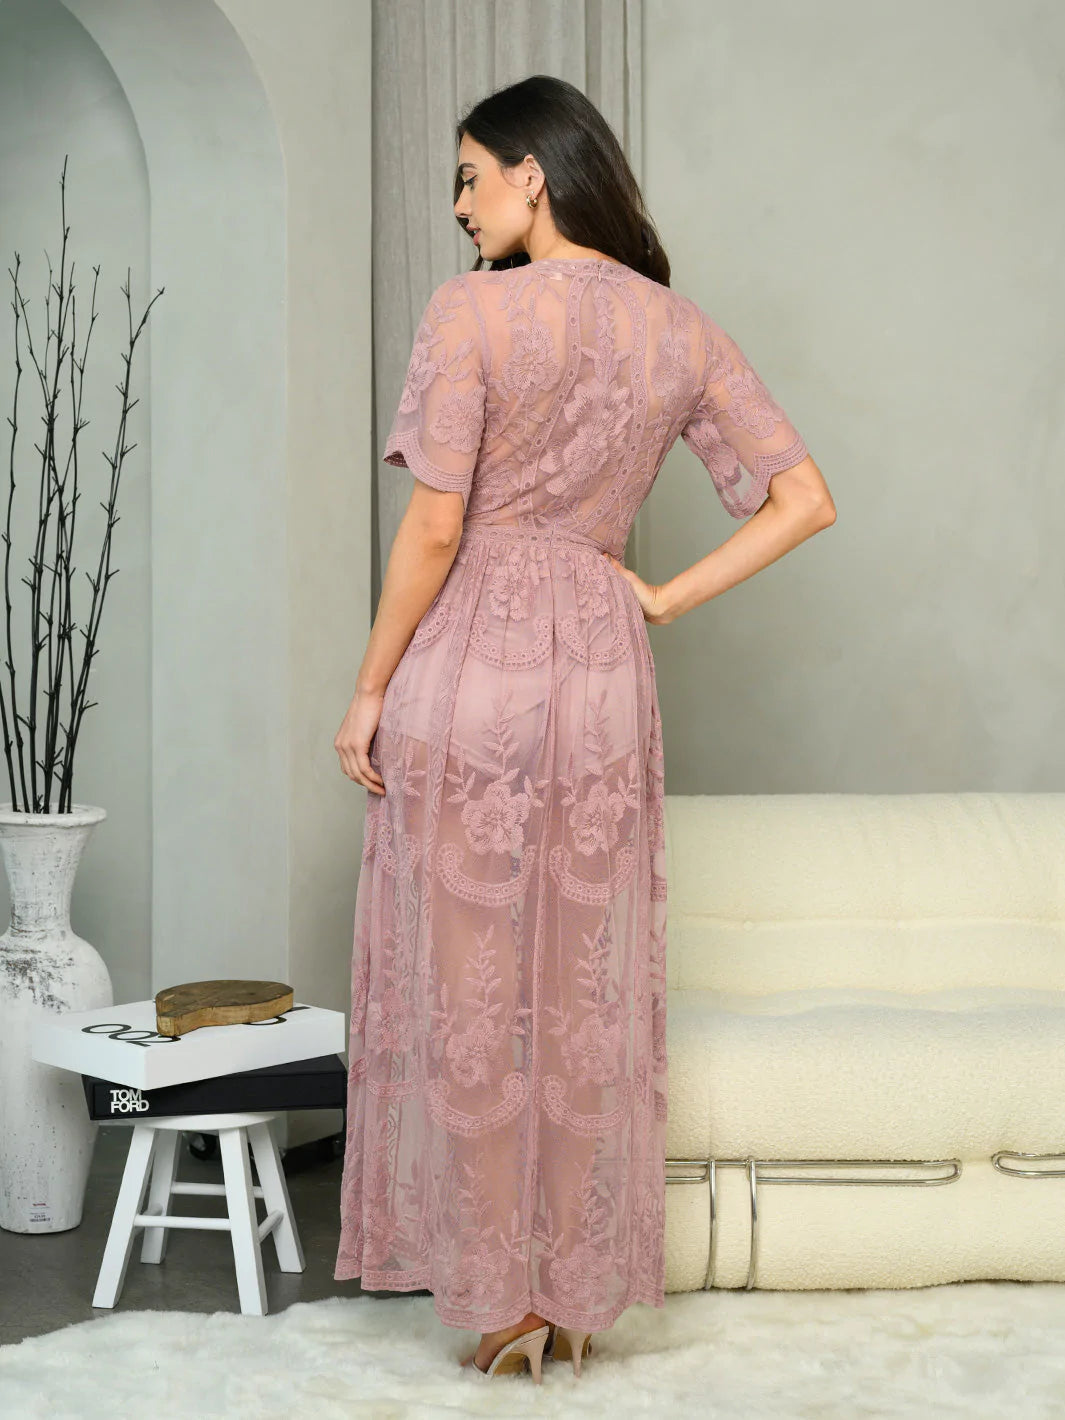 Short sleeve Lace Overlay Maxi Dress